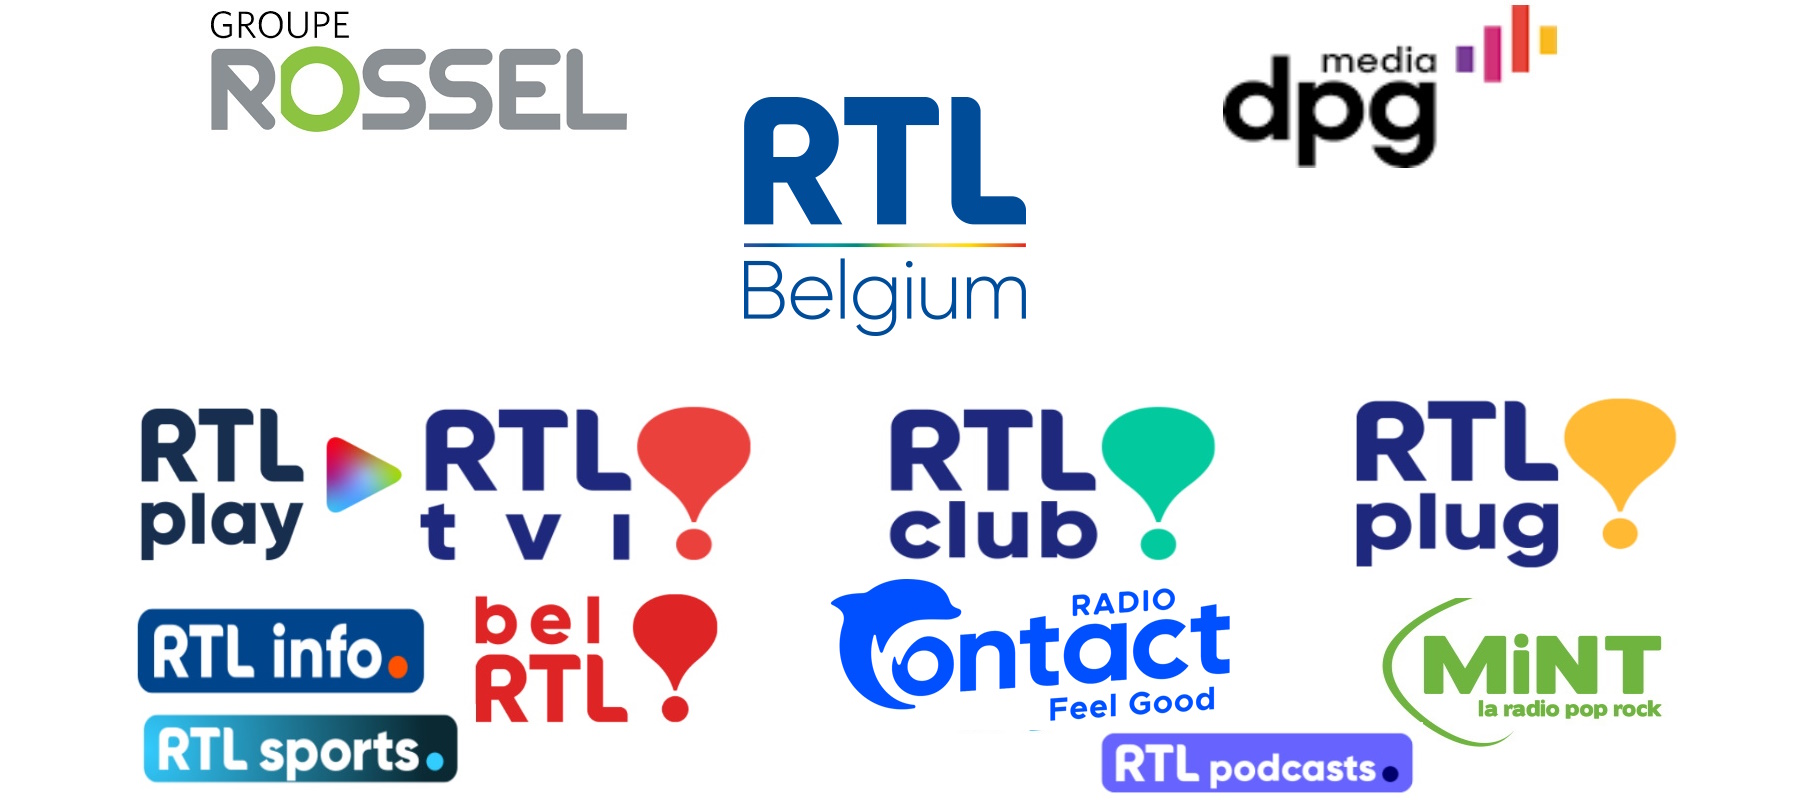 RTL-TVI, RTL Club en RTL Plug verhuizen van Luxemburg naar Franstalig België